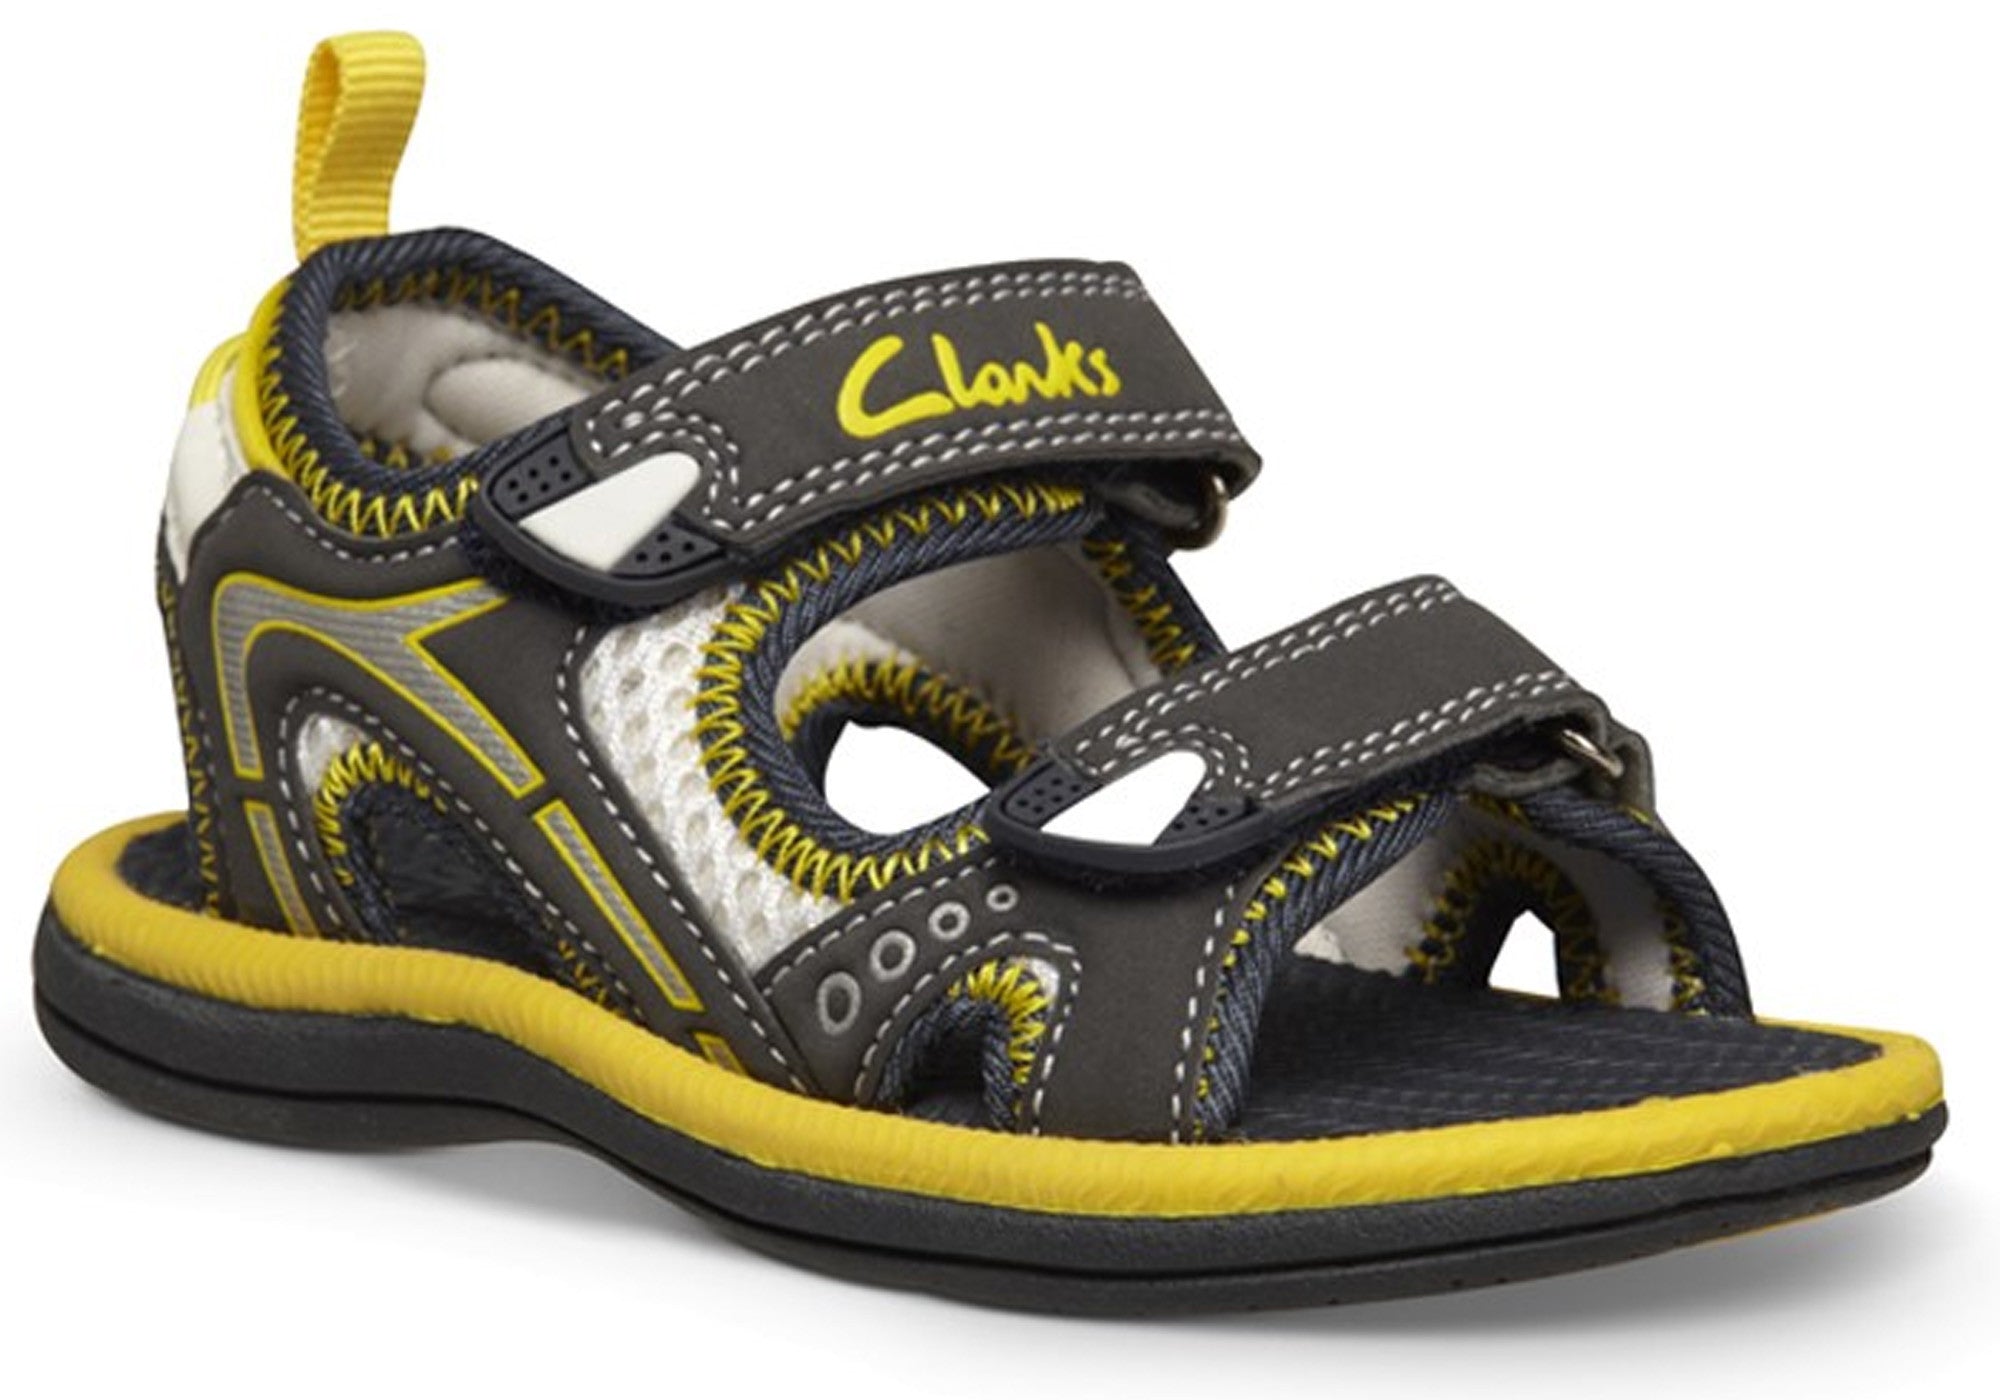 clarks sandals for kids